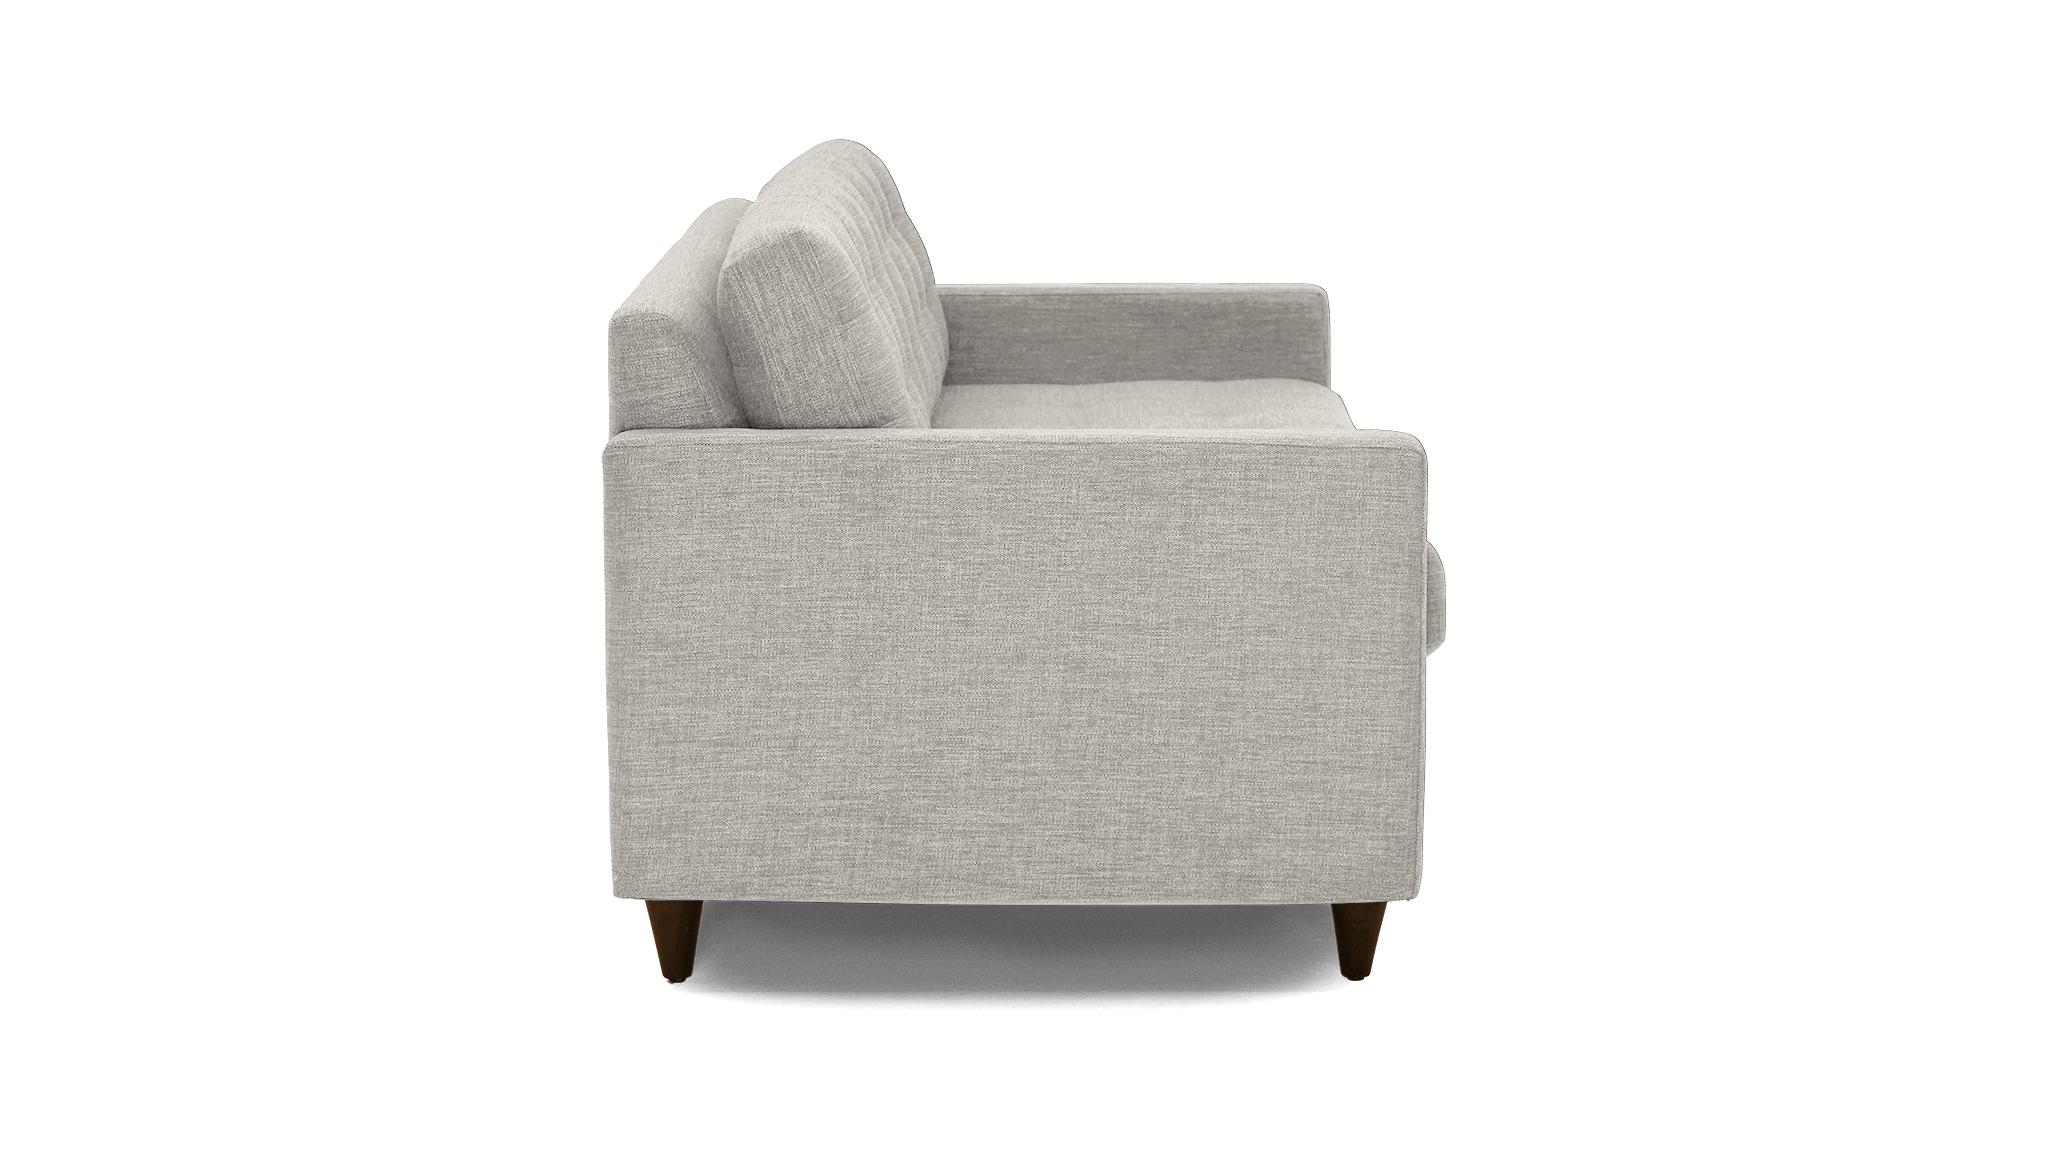 White Eliot Mid Century Modern Sleeper Sofa - Bloke Cotton - Mocha - Standard Foam - Image 2